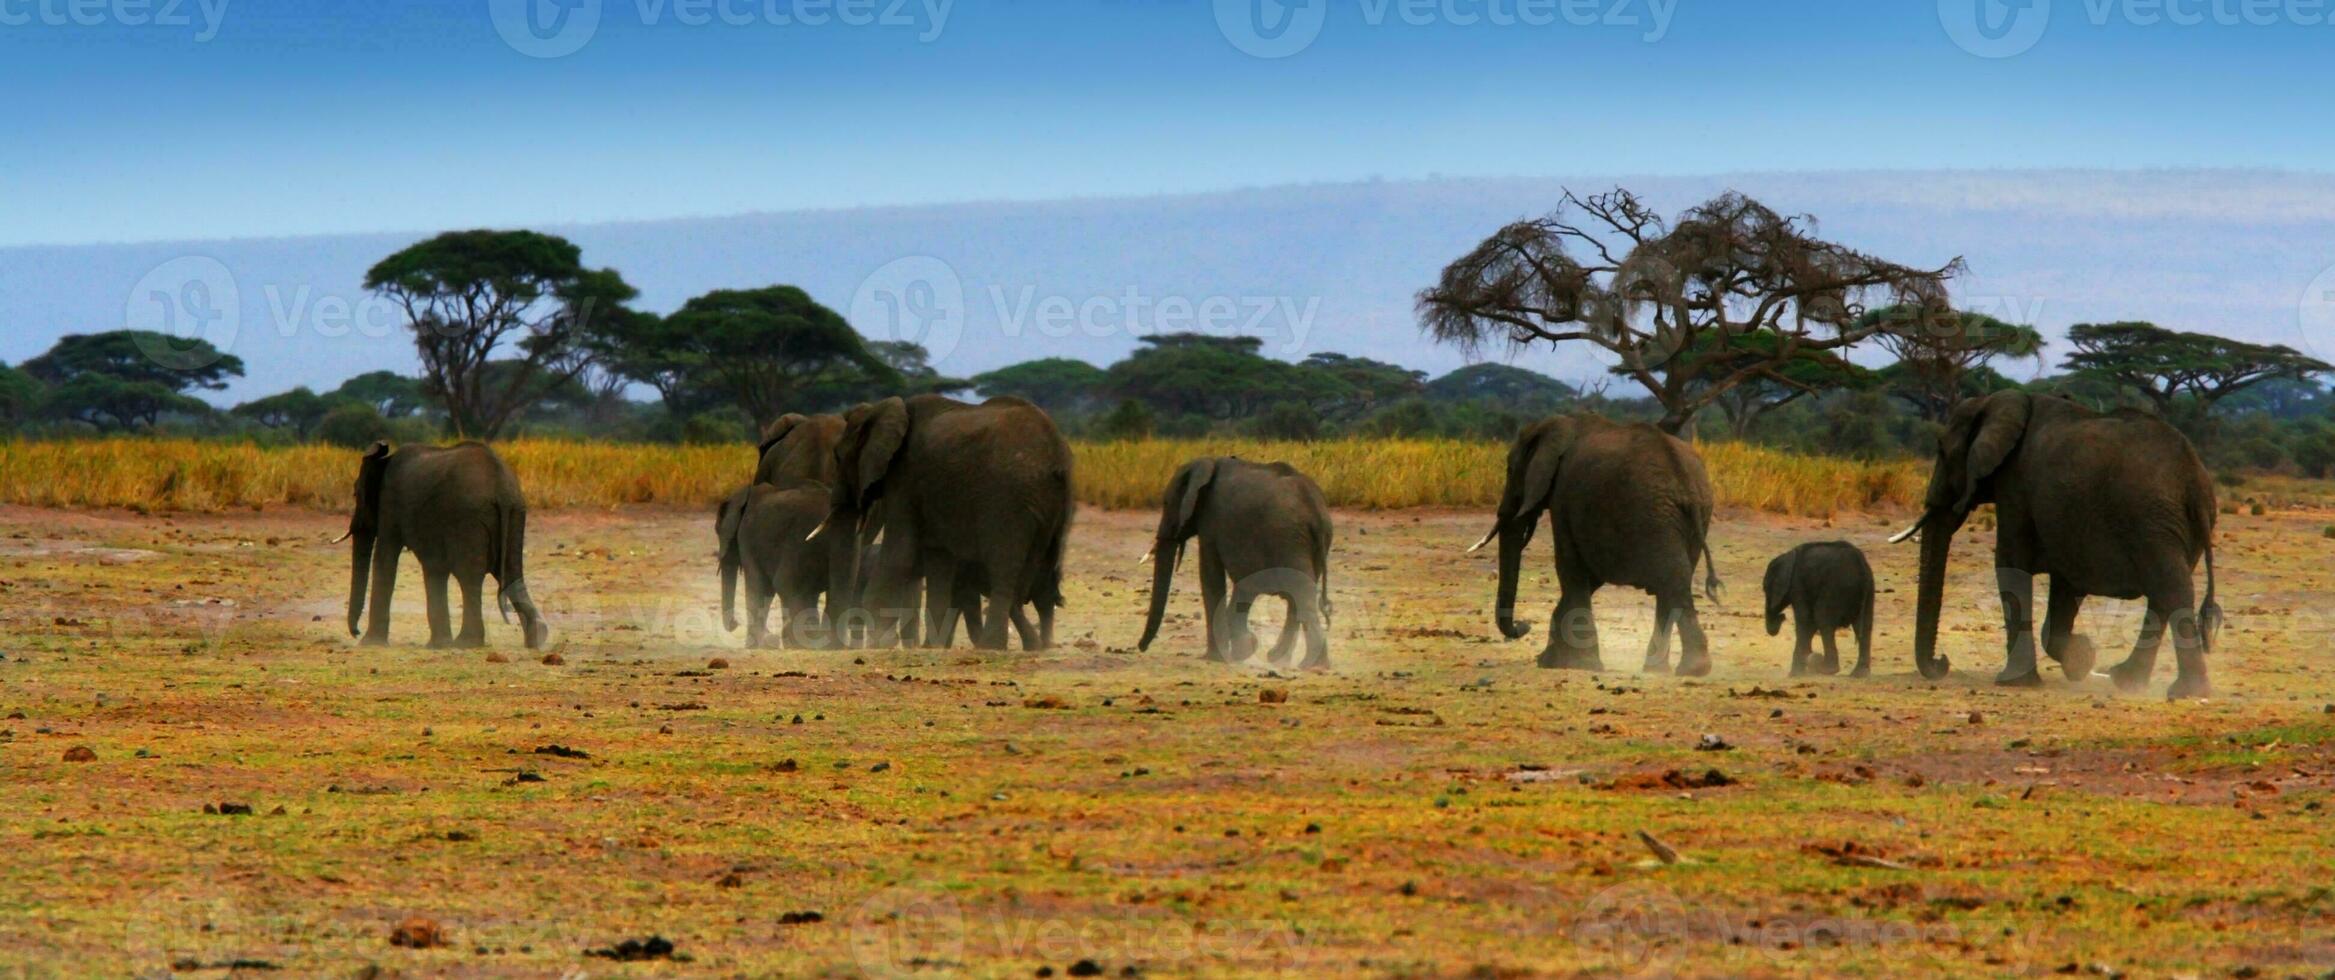 africano salvaje elefantes foto